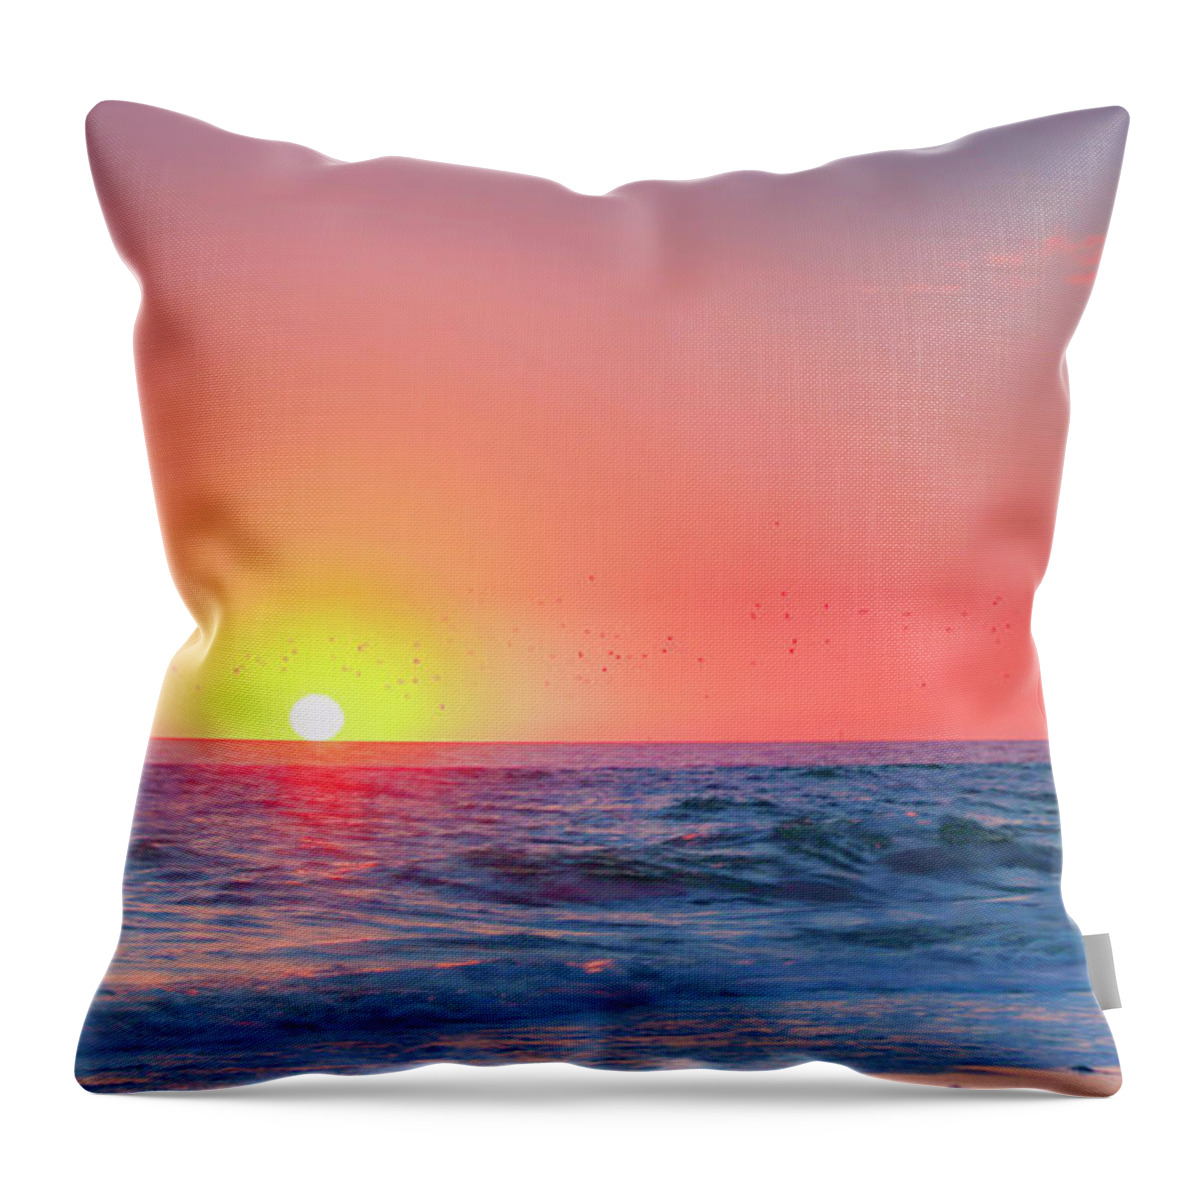 Art Prints Throw Pillow featuring the photograph Beach 02 by Nunweiler Photography